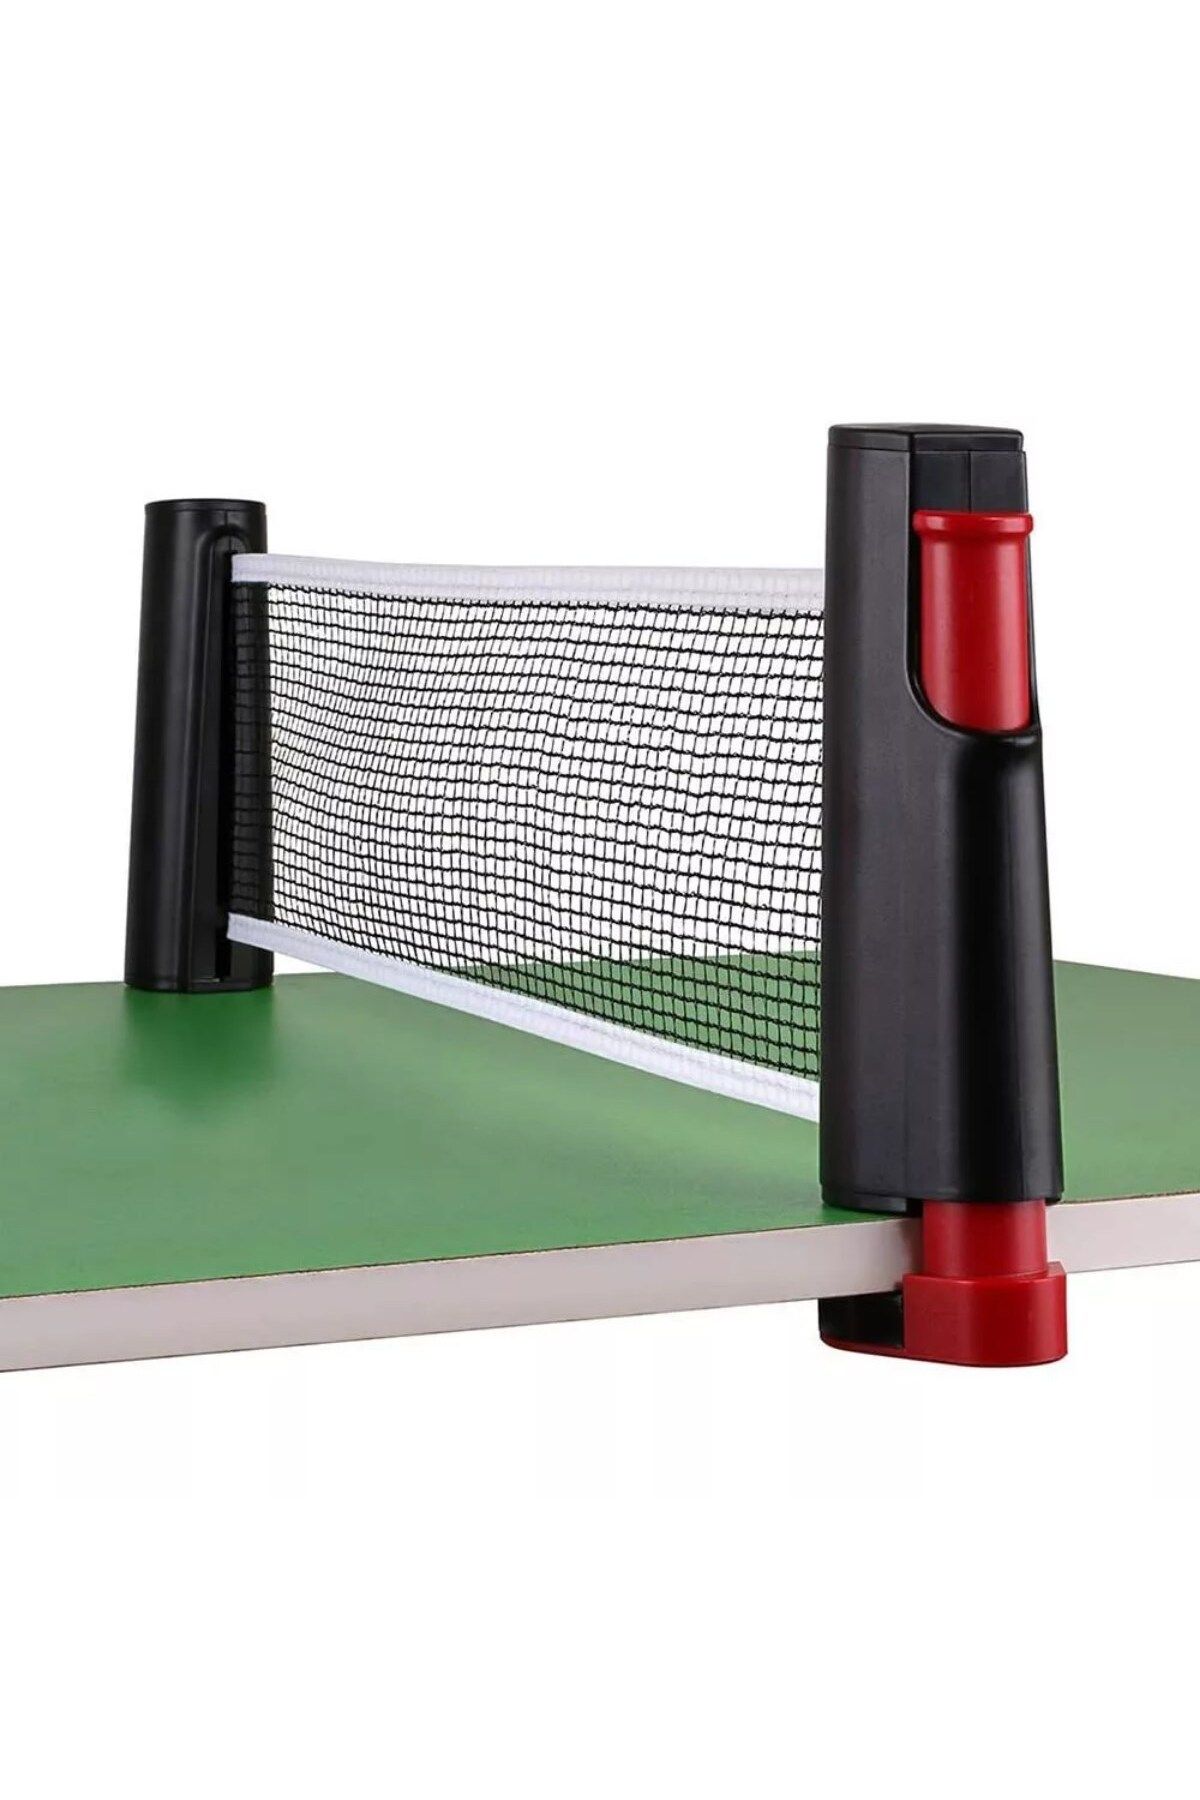 MirtaButik Teleskopik Taşınabilir Kaymaz Ping Pong Masa Tenisi Filesi Aparatı (4434)